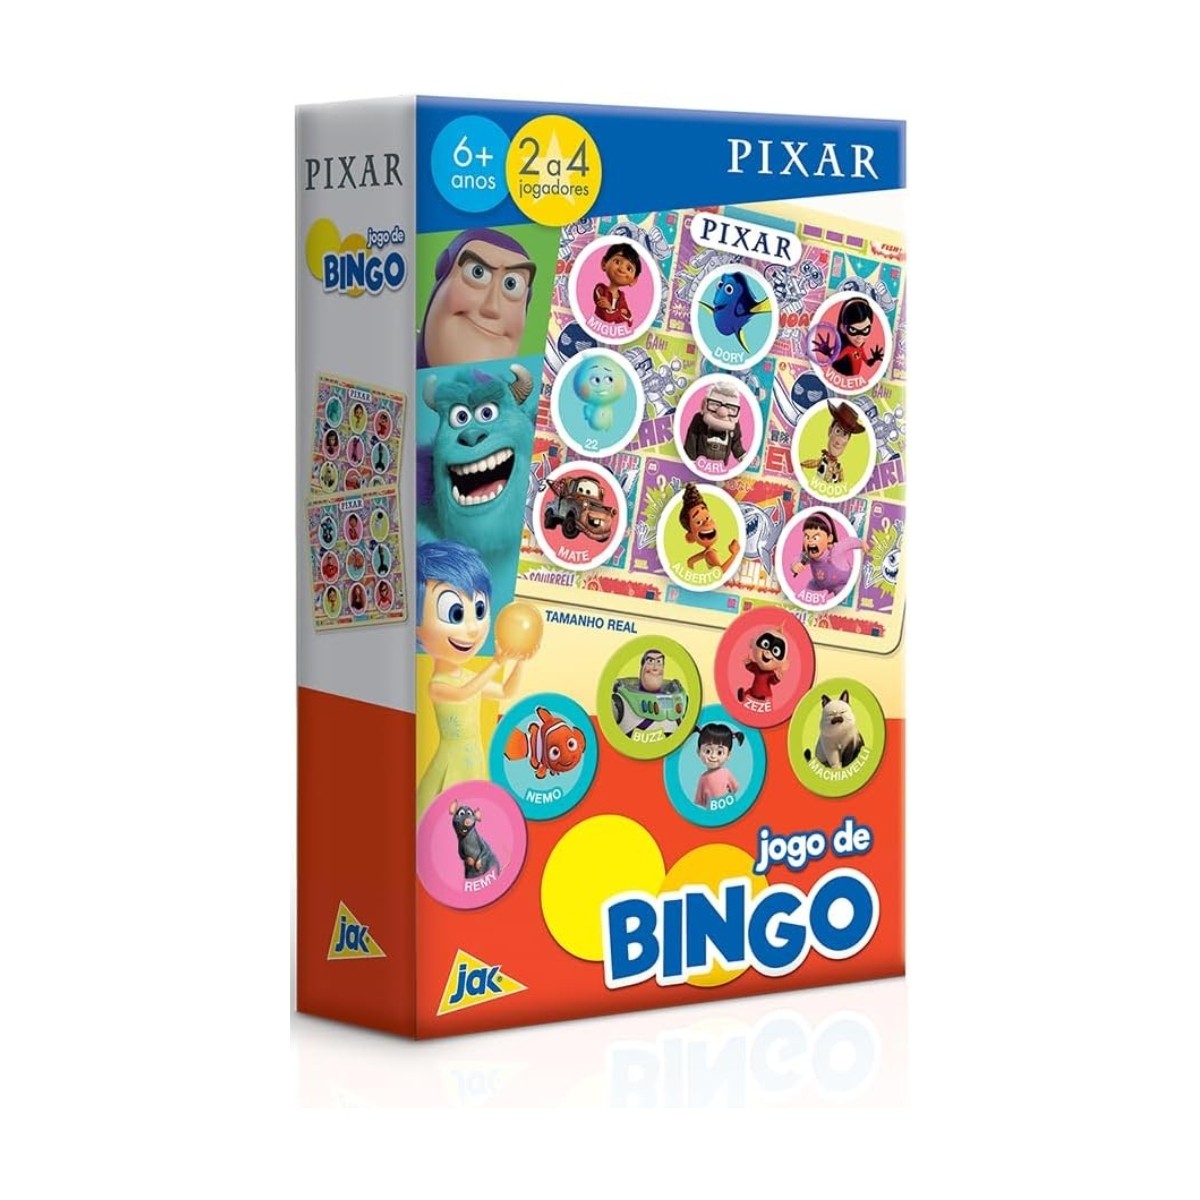 Jogo de Bingo - Pixar - Toyster